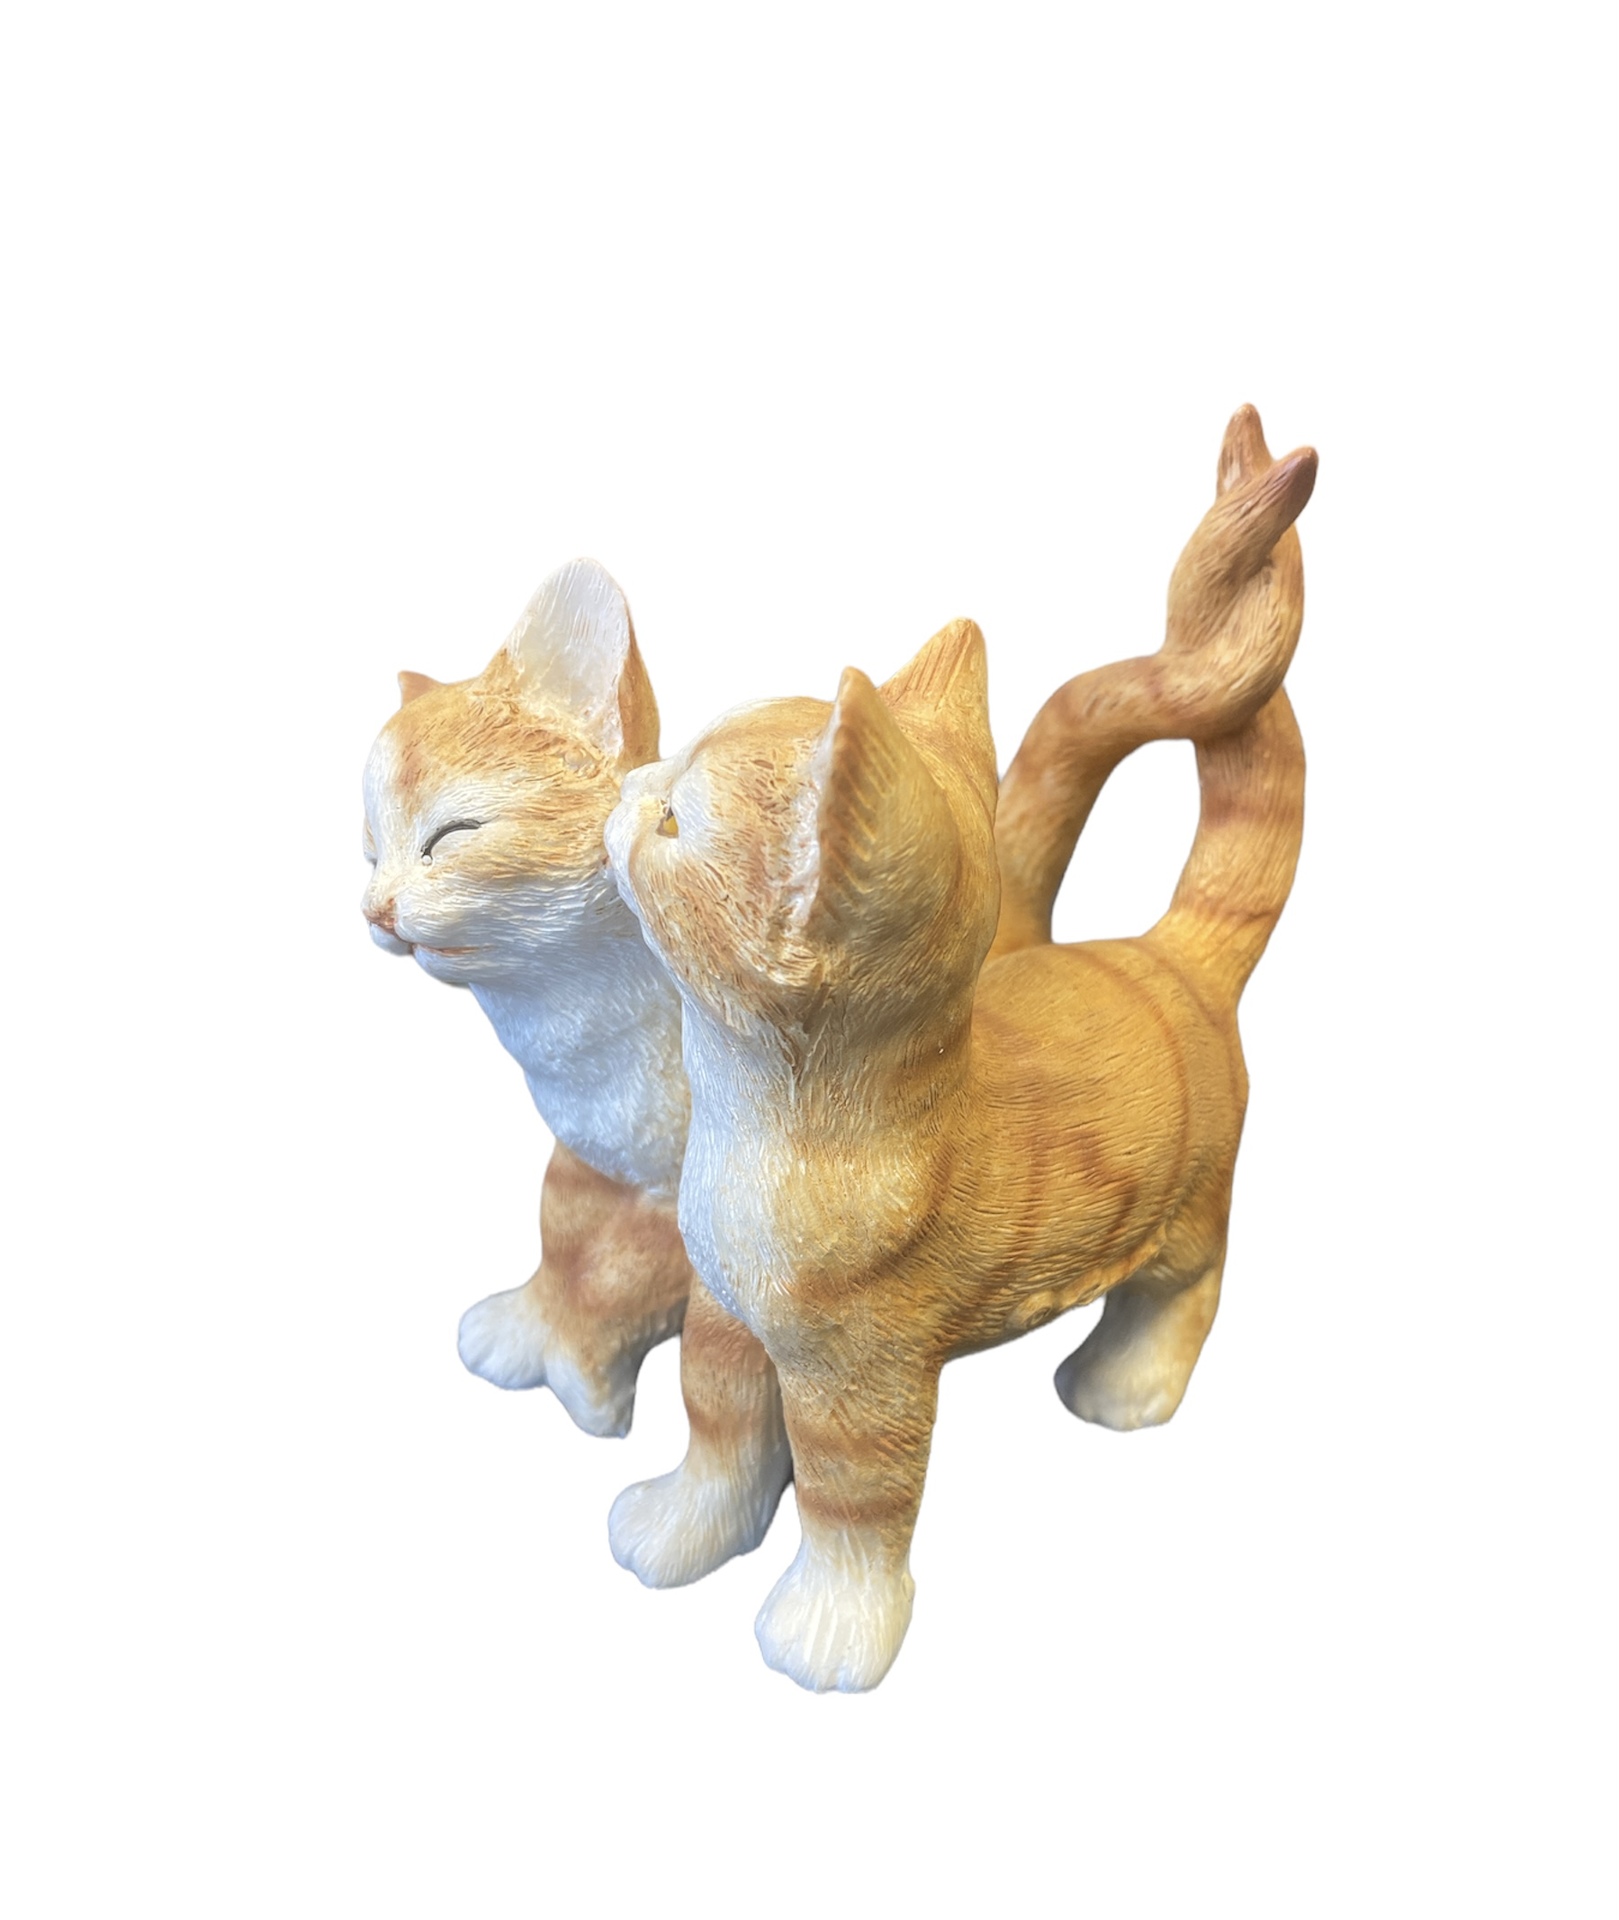 Pair of Cats Kittens Ornament by Leonardo Kitten Figurine Colour Choice Cat 